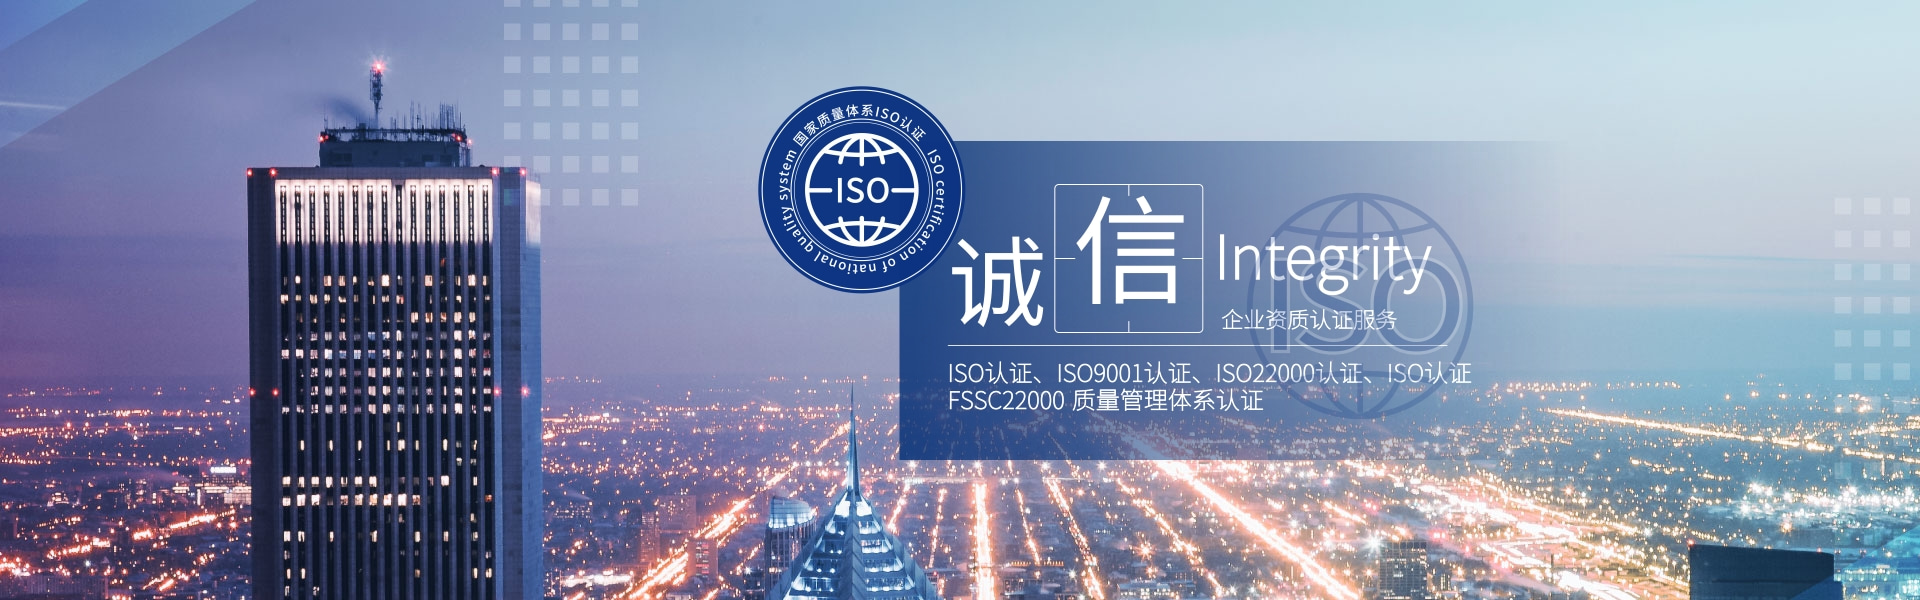 iso27001认证_服务项目_深圳汉墨企业管理咨询有限公司